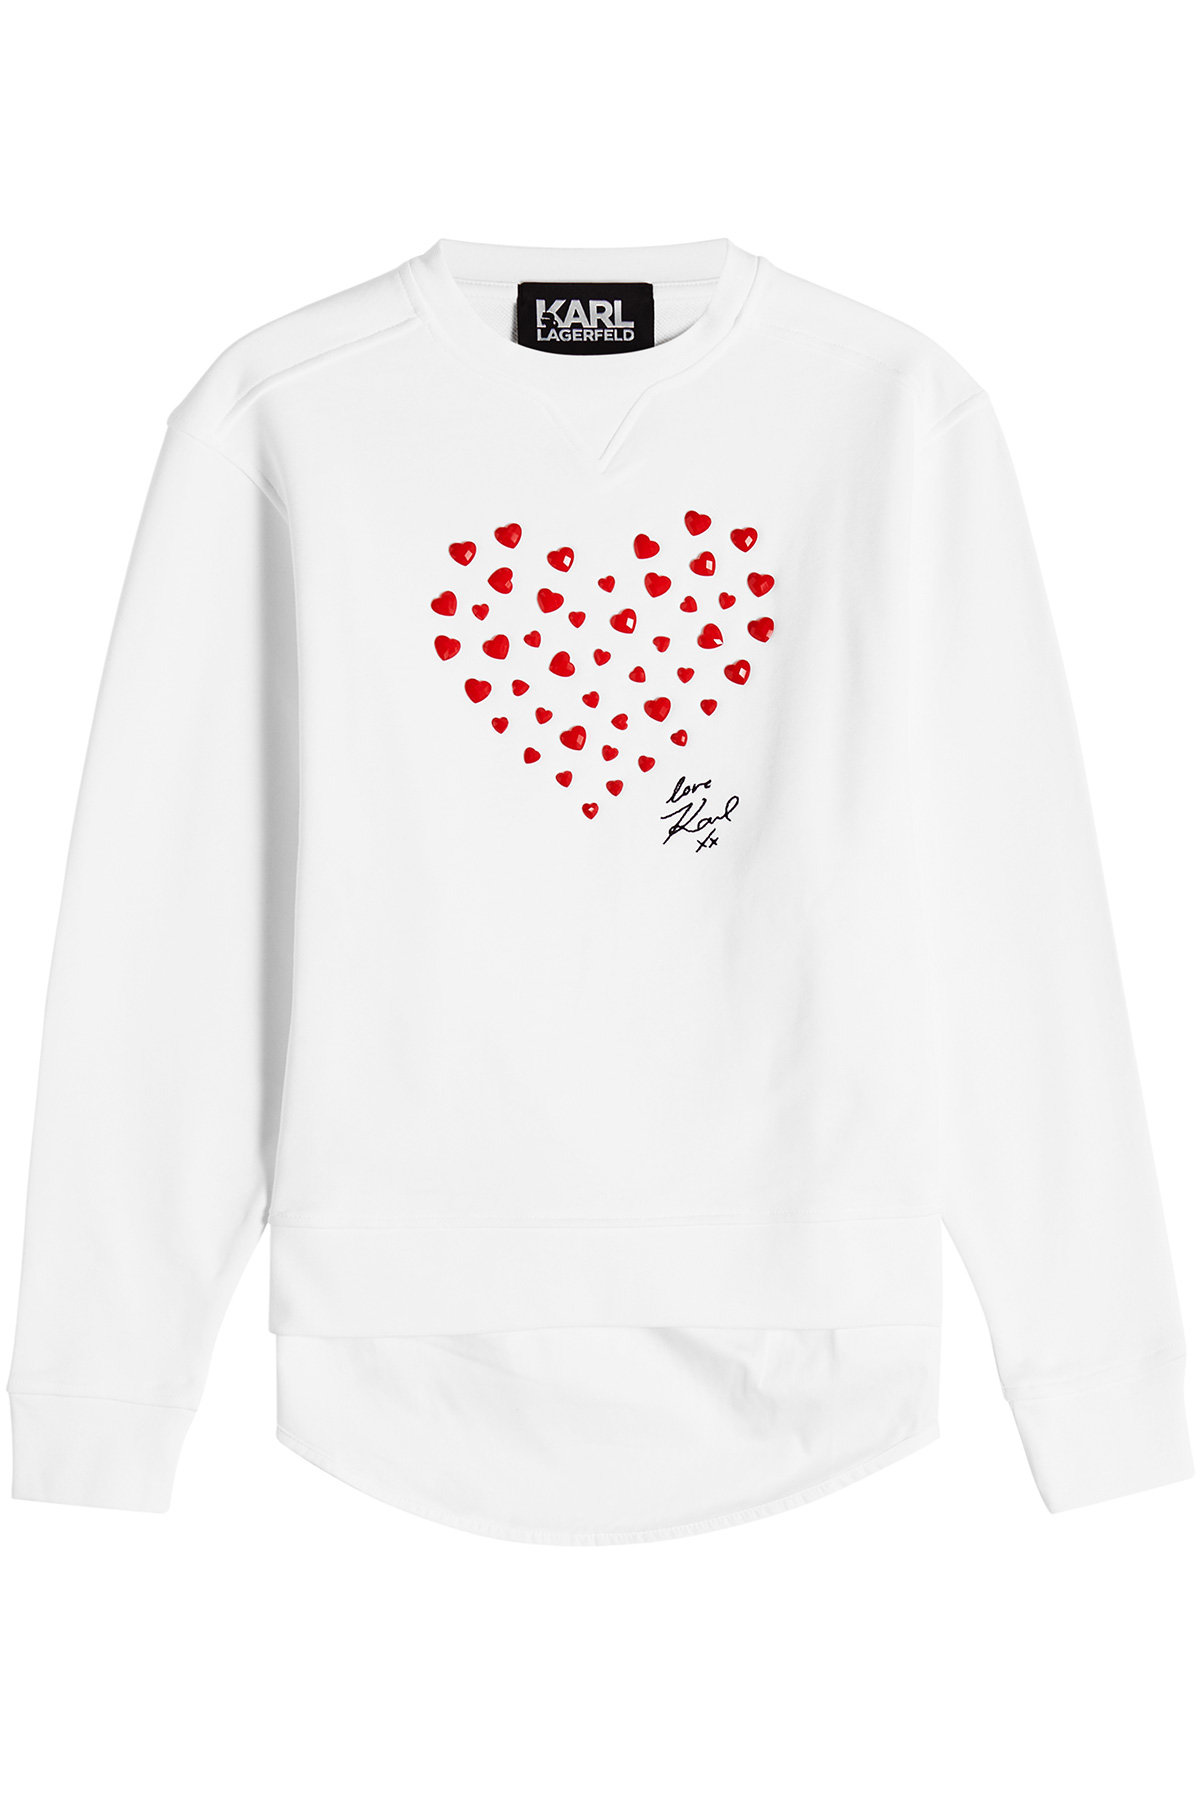 Karl Lagerfeld - Karl Love Embellished Cotton Sweatshirt